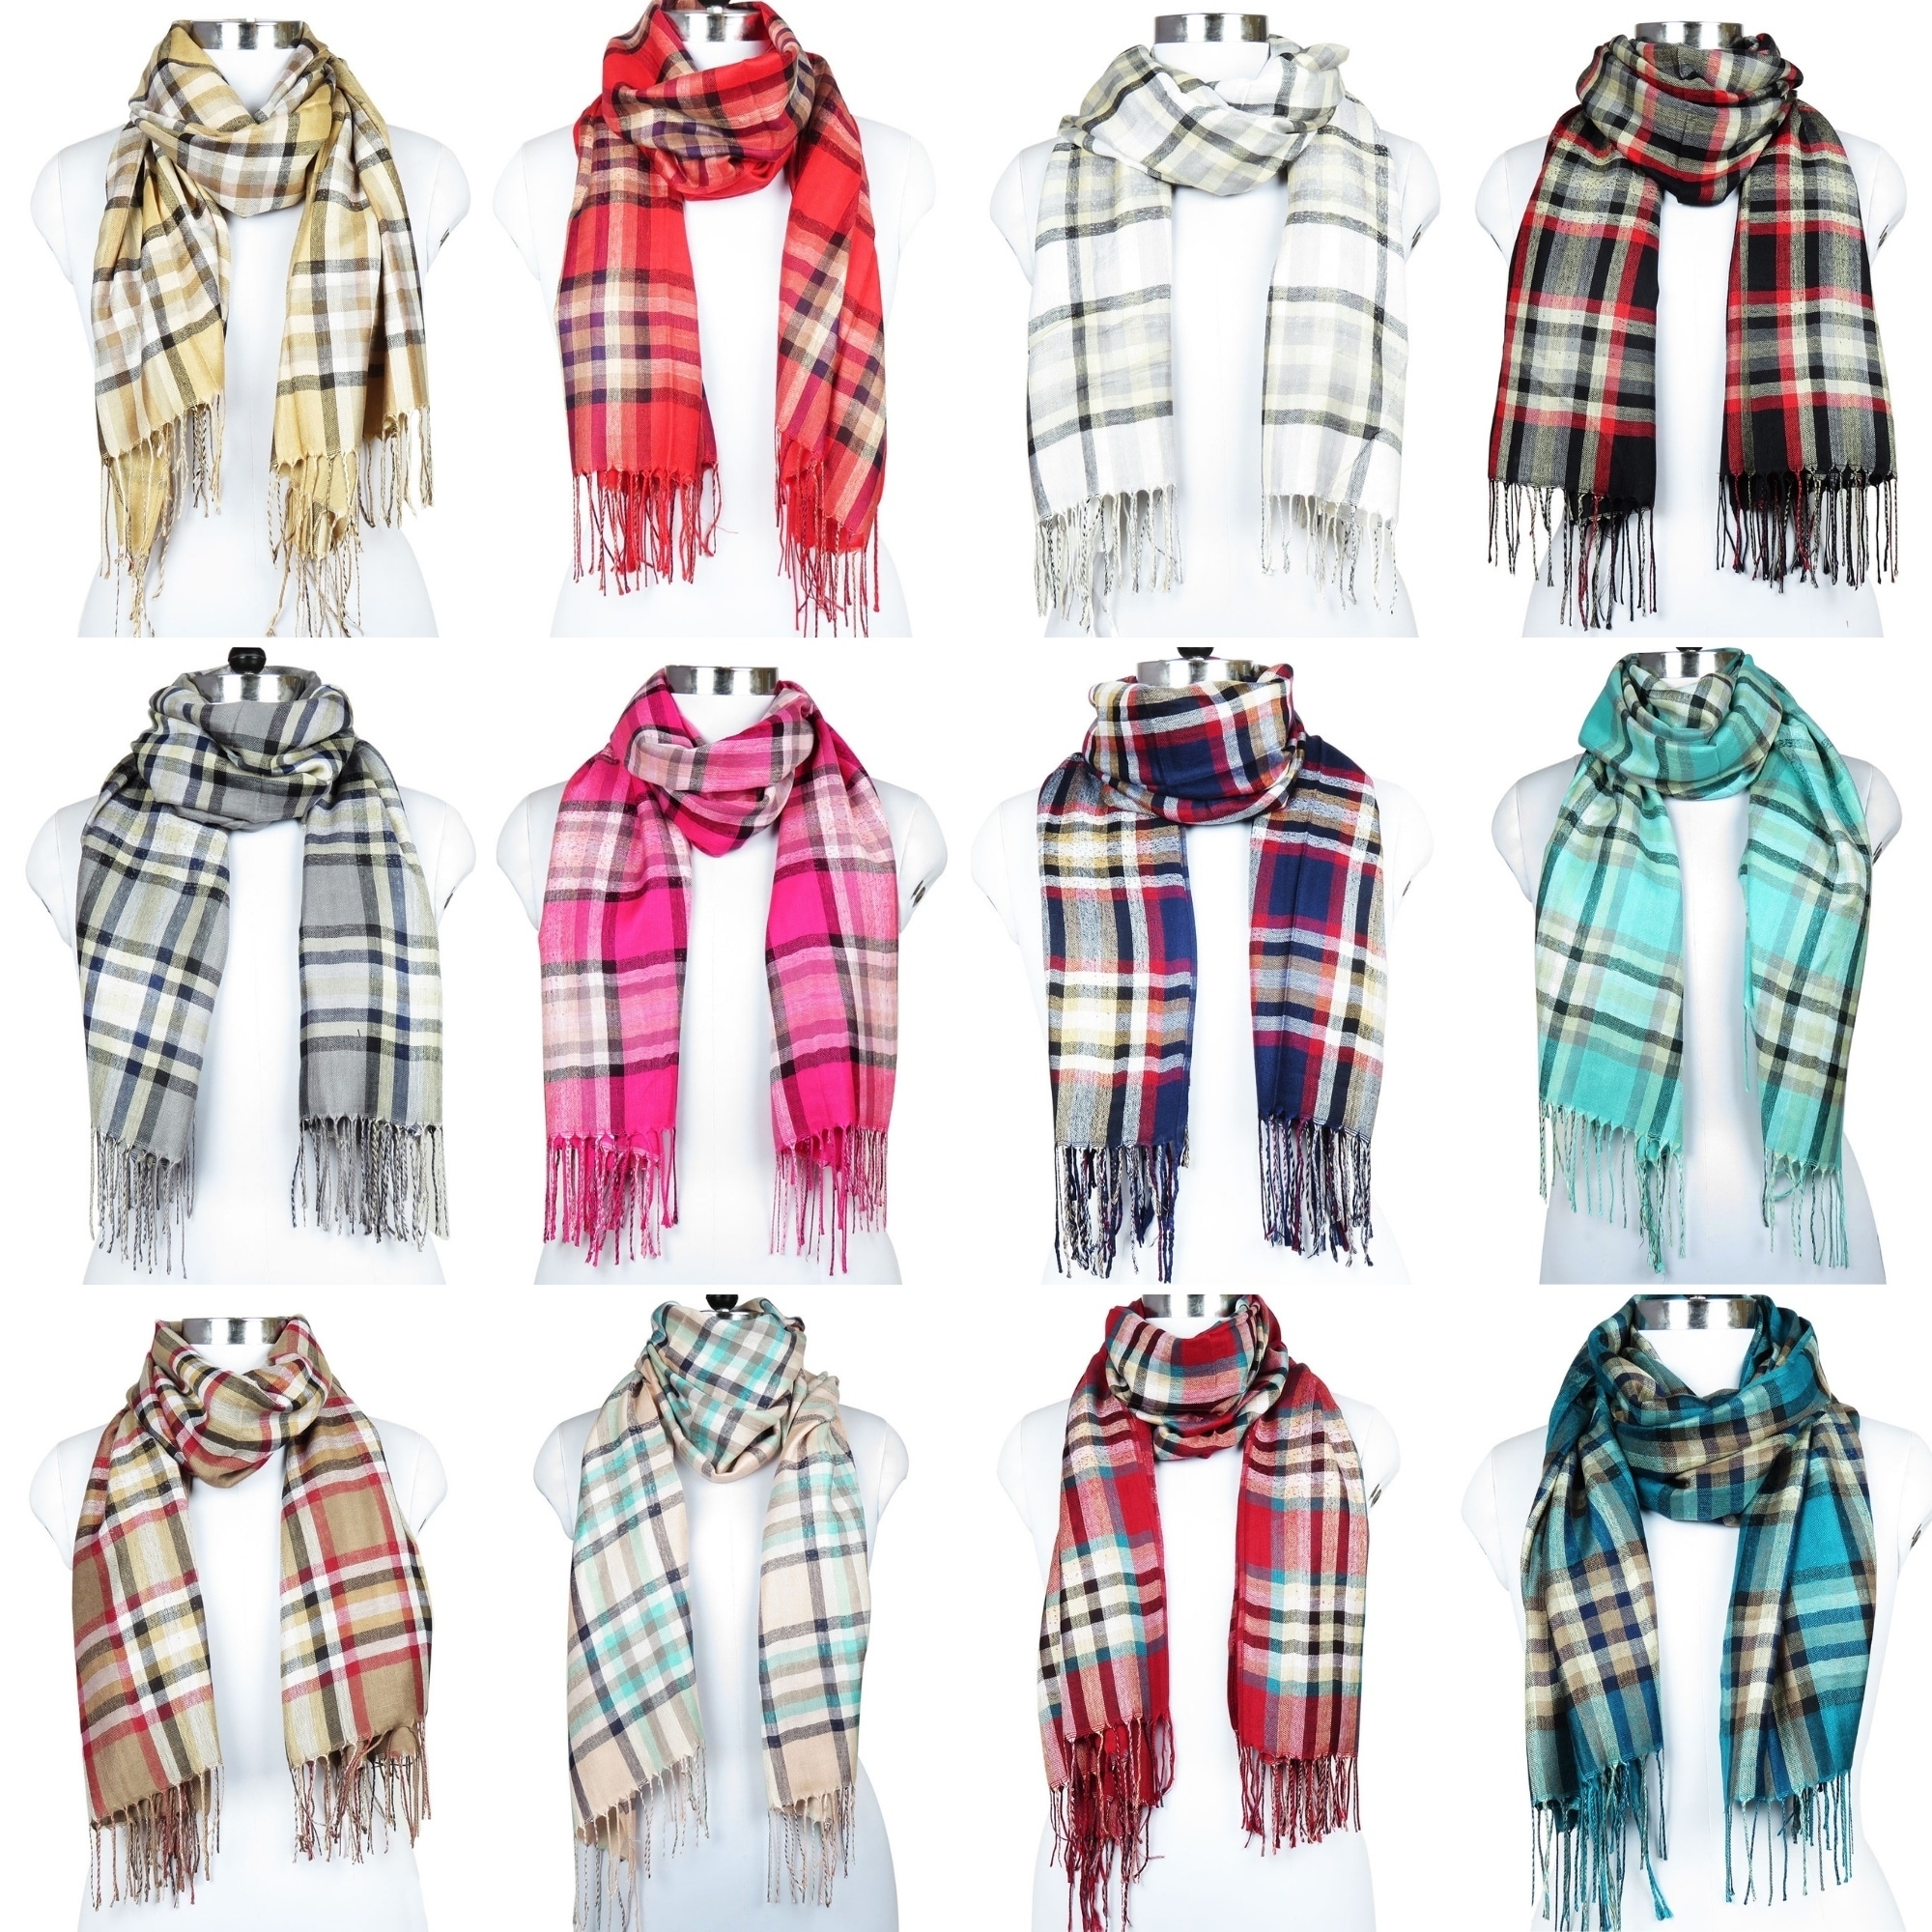 Shop Women Plaid Winter Fashion Scarfs Neck Blanket Warm Scarves